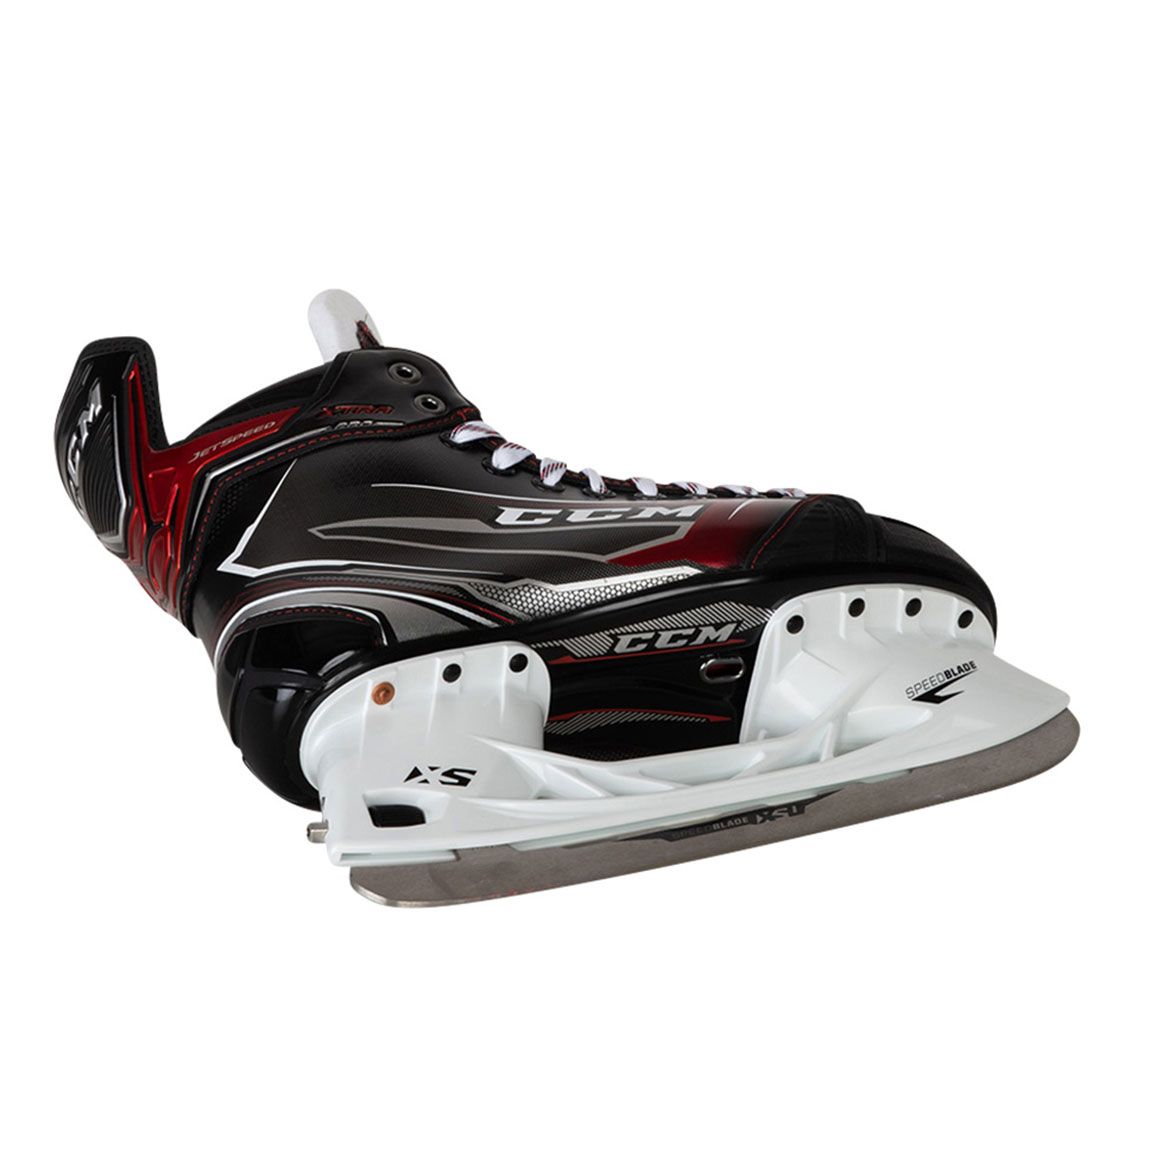 2.5D Black/Red NEW CCM Jetspeed Xtra Pro Junior Ice Hockey Skates Size